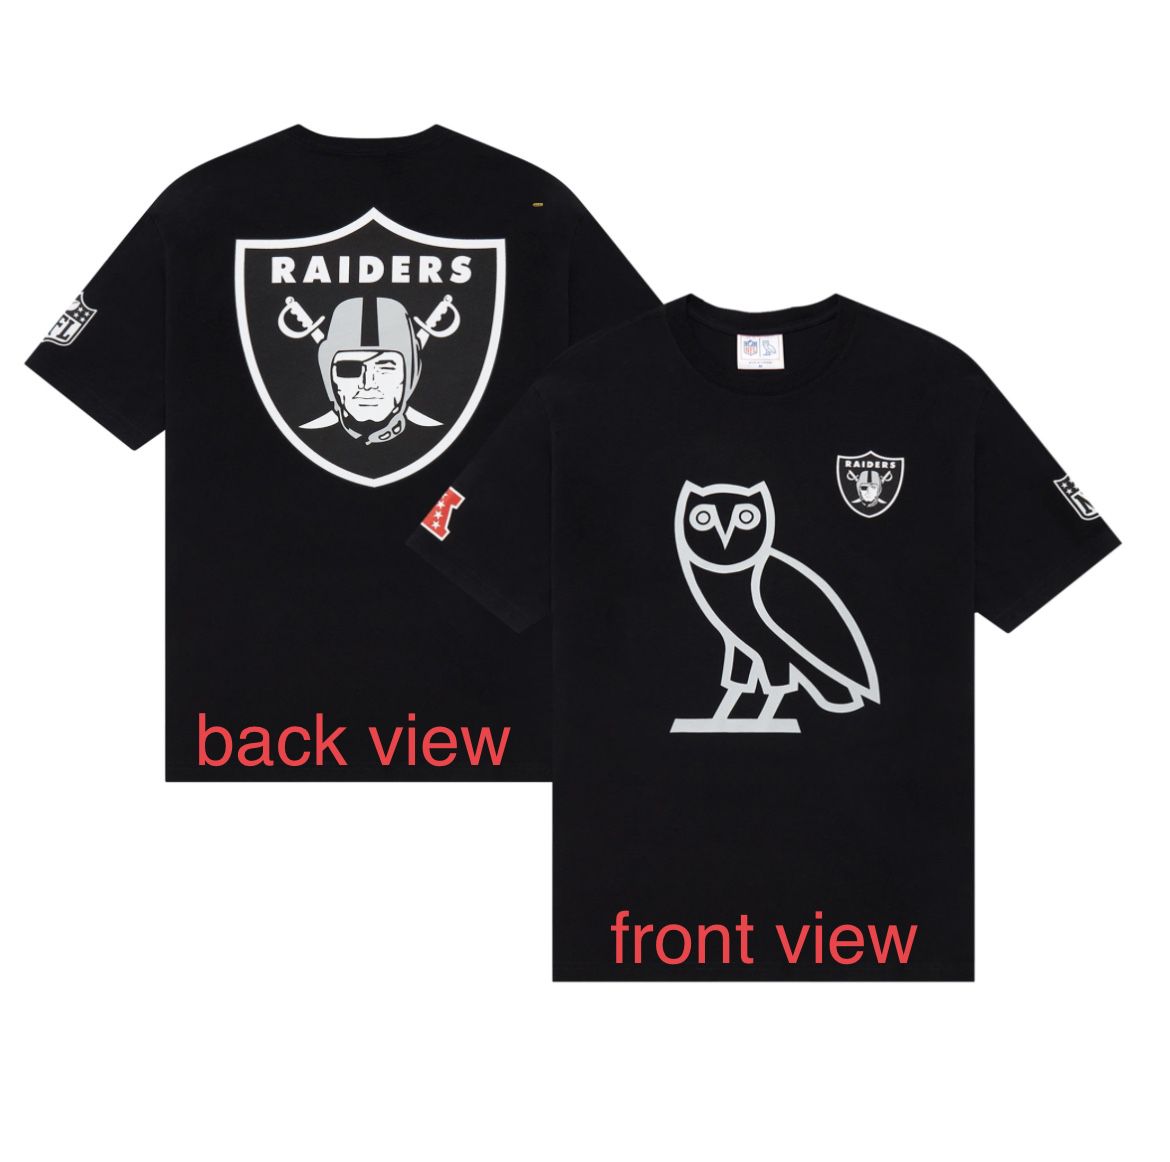 OVO x NFL Raiders Las Vegas OG Owl Black Tee Size Small Confirmed Order